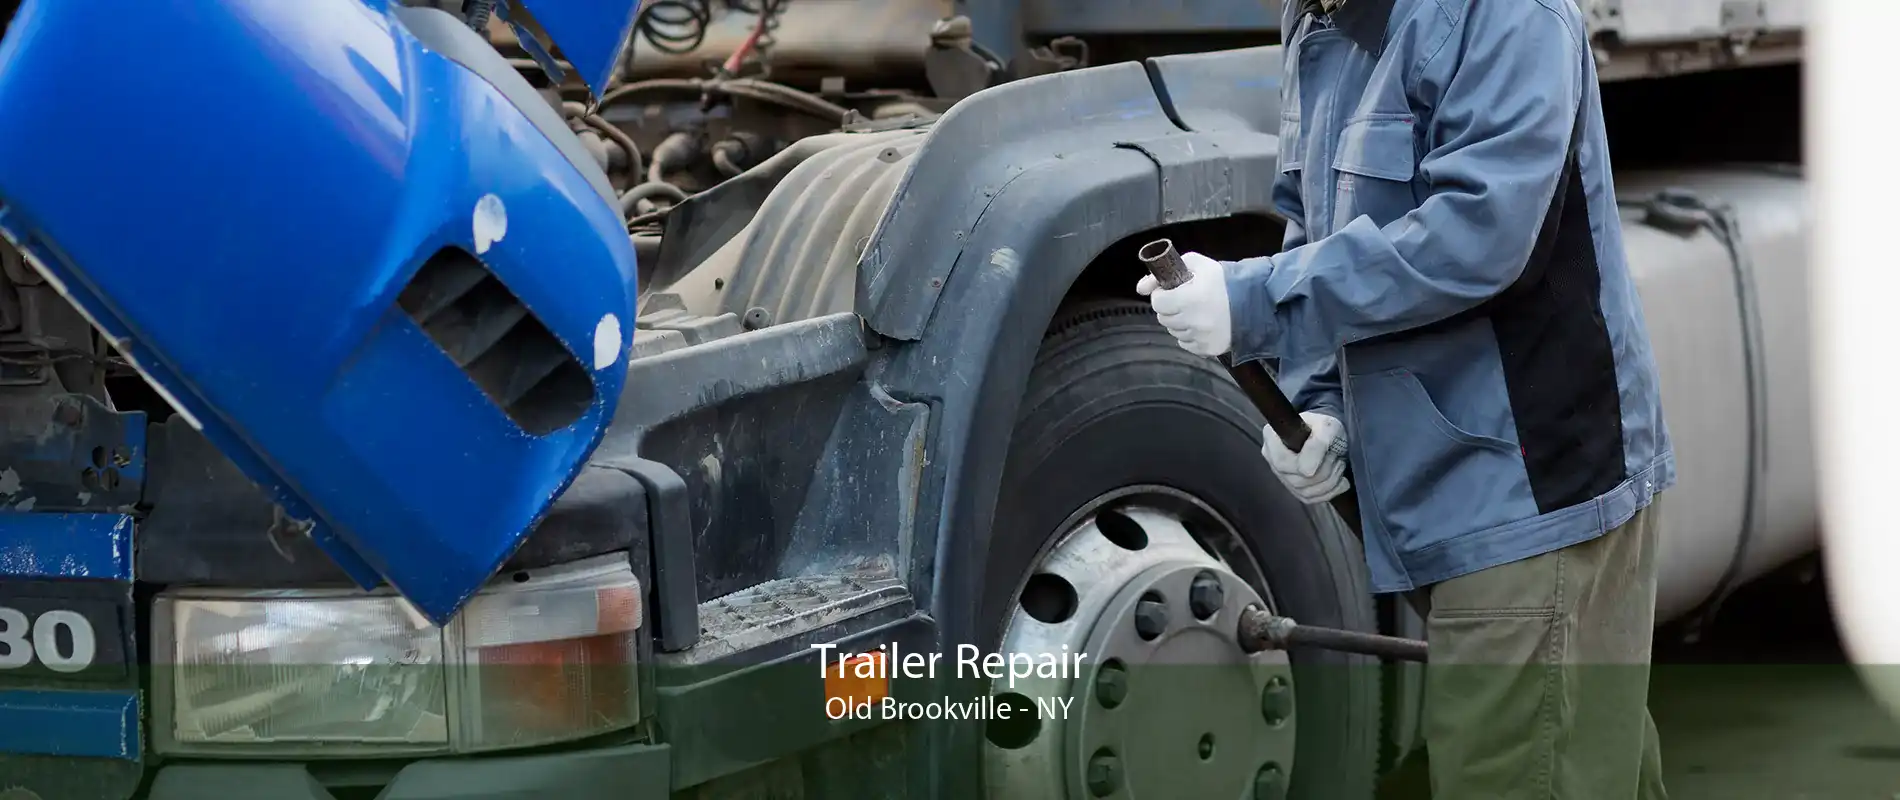 Trailer Repair Old Brookville - NY